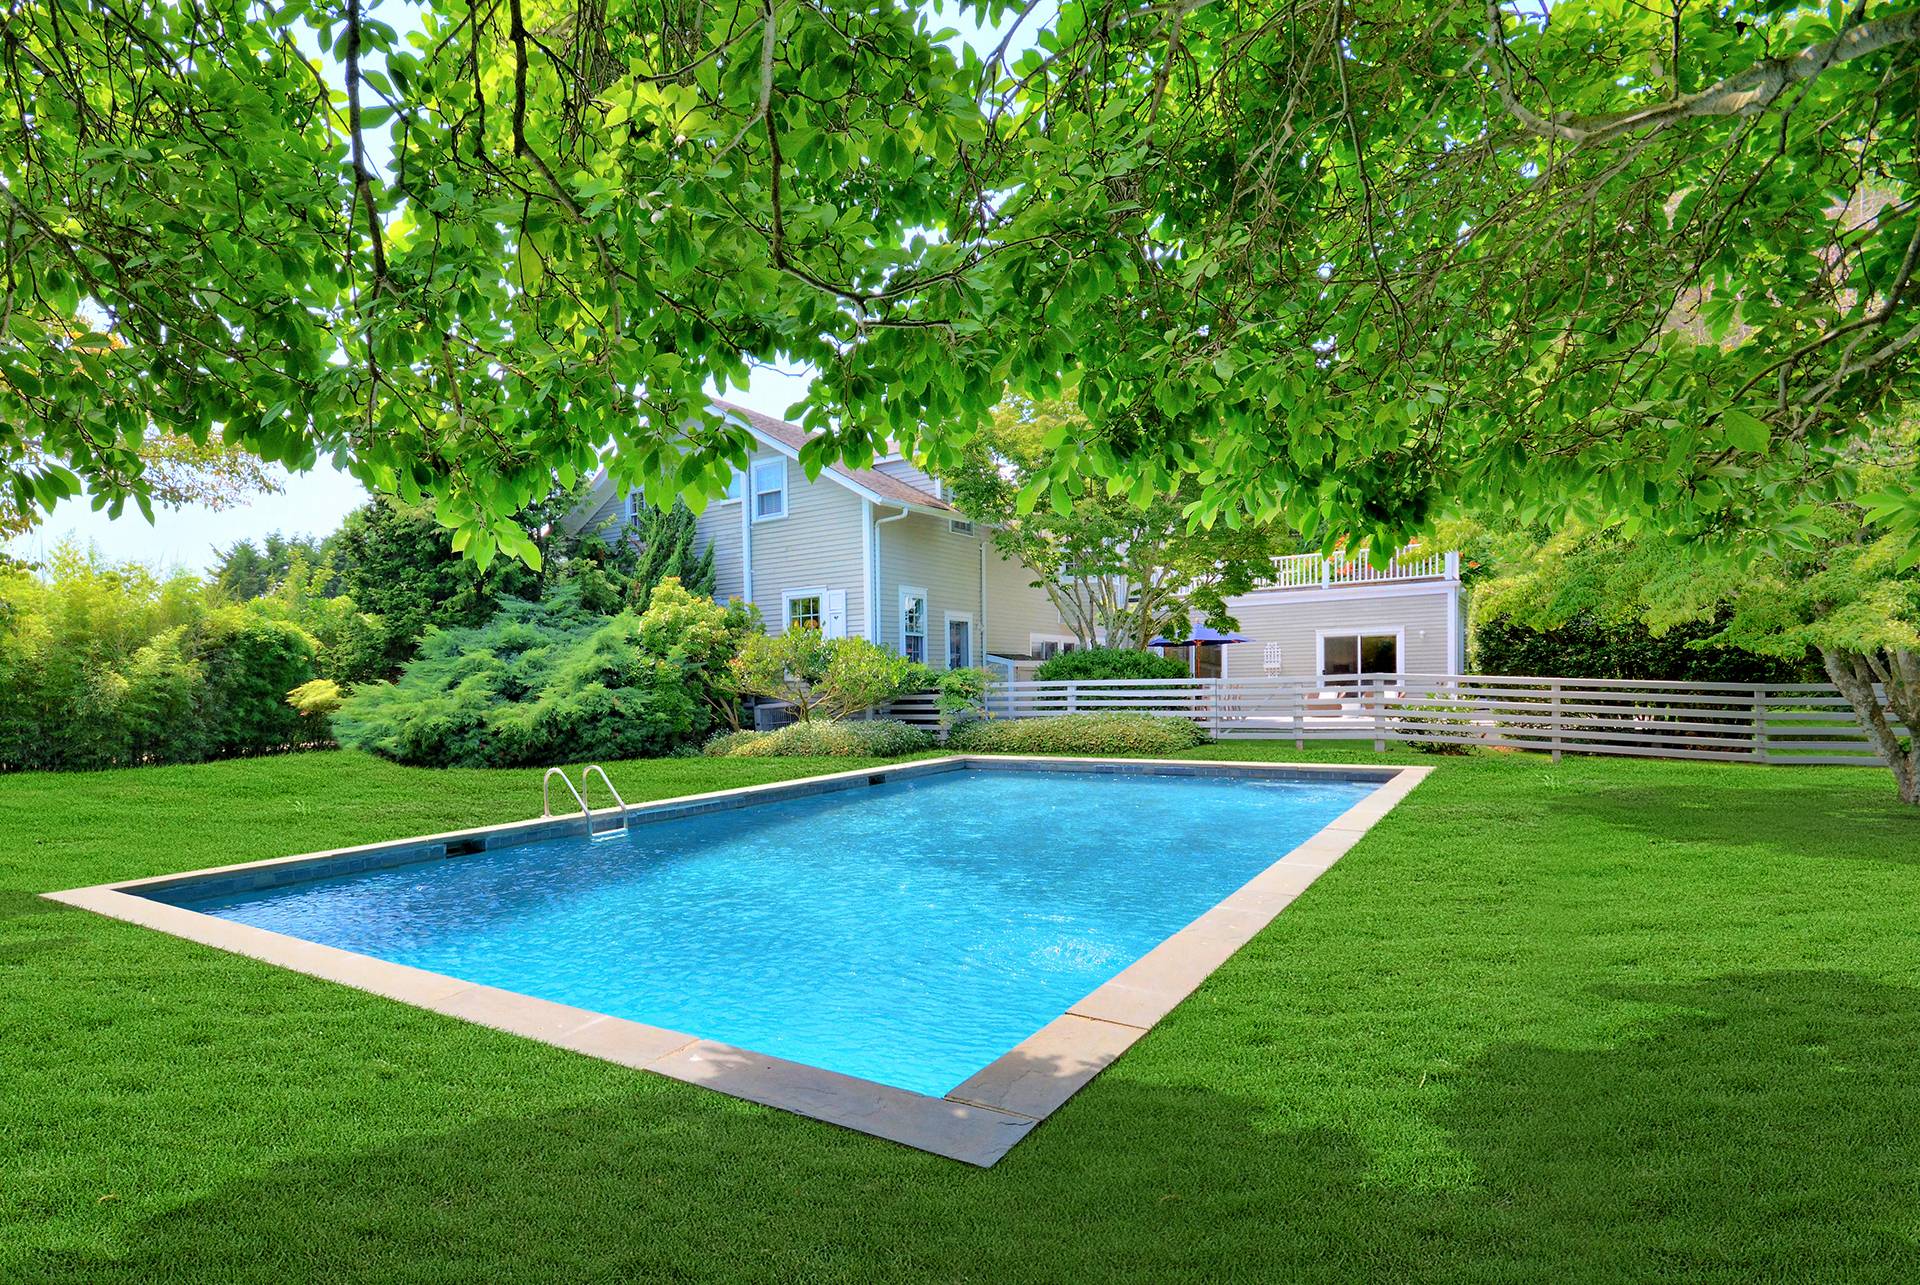 Rental Property at Village Of Southampton, Village Of Southampton, Hamptons, NY - Bedrooms: 5 
Bathrooms: 5.5  - $220,000 MO.